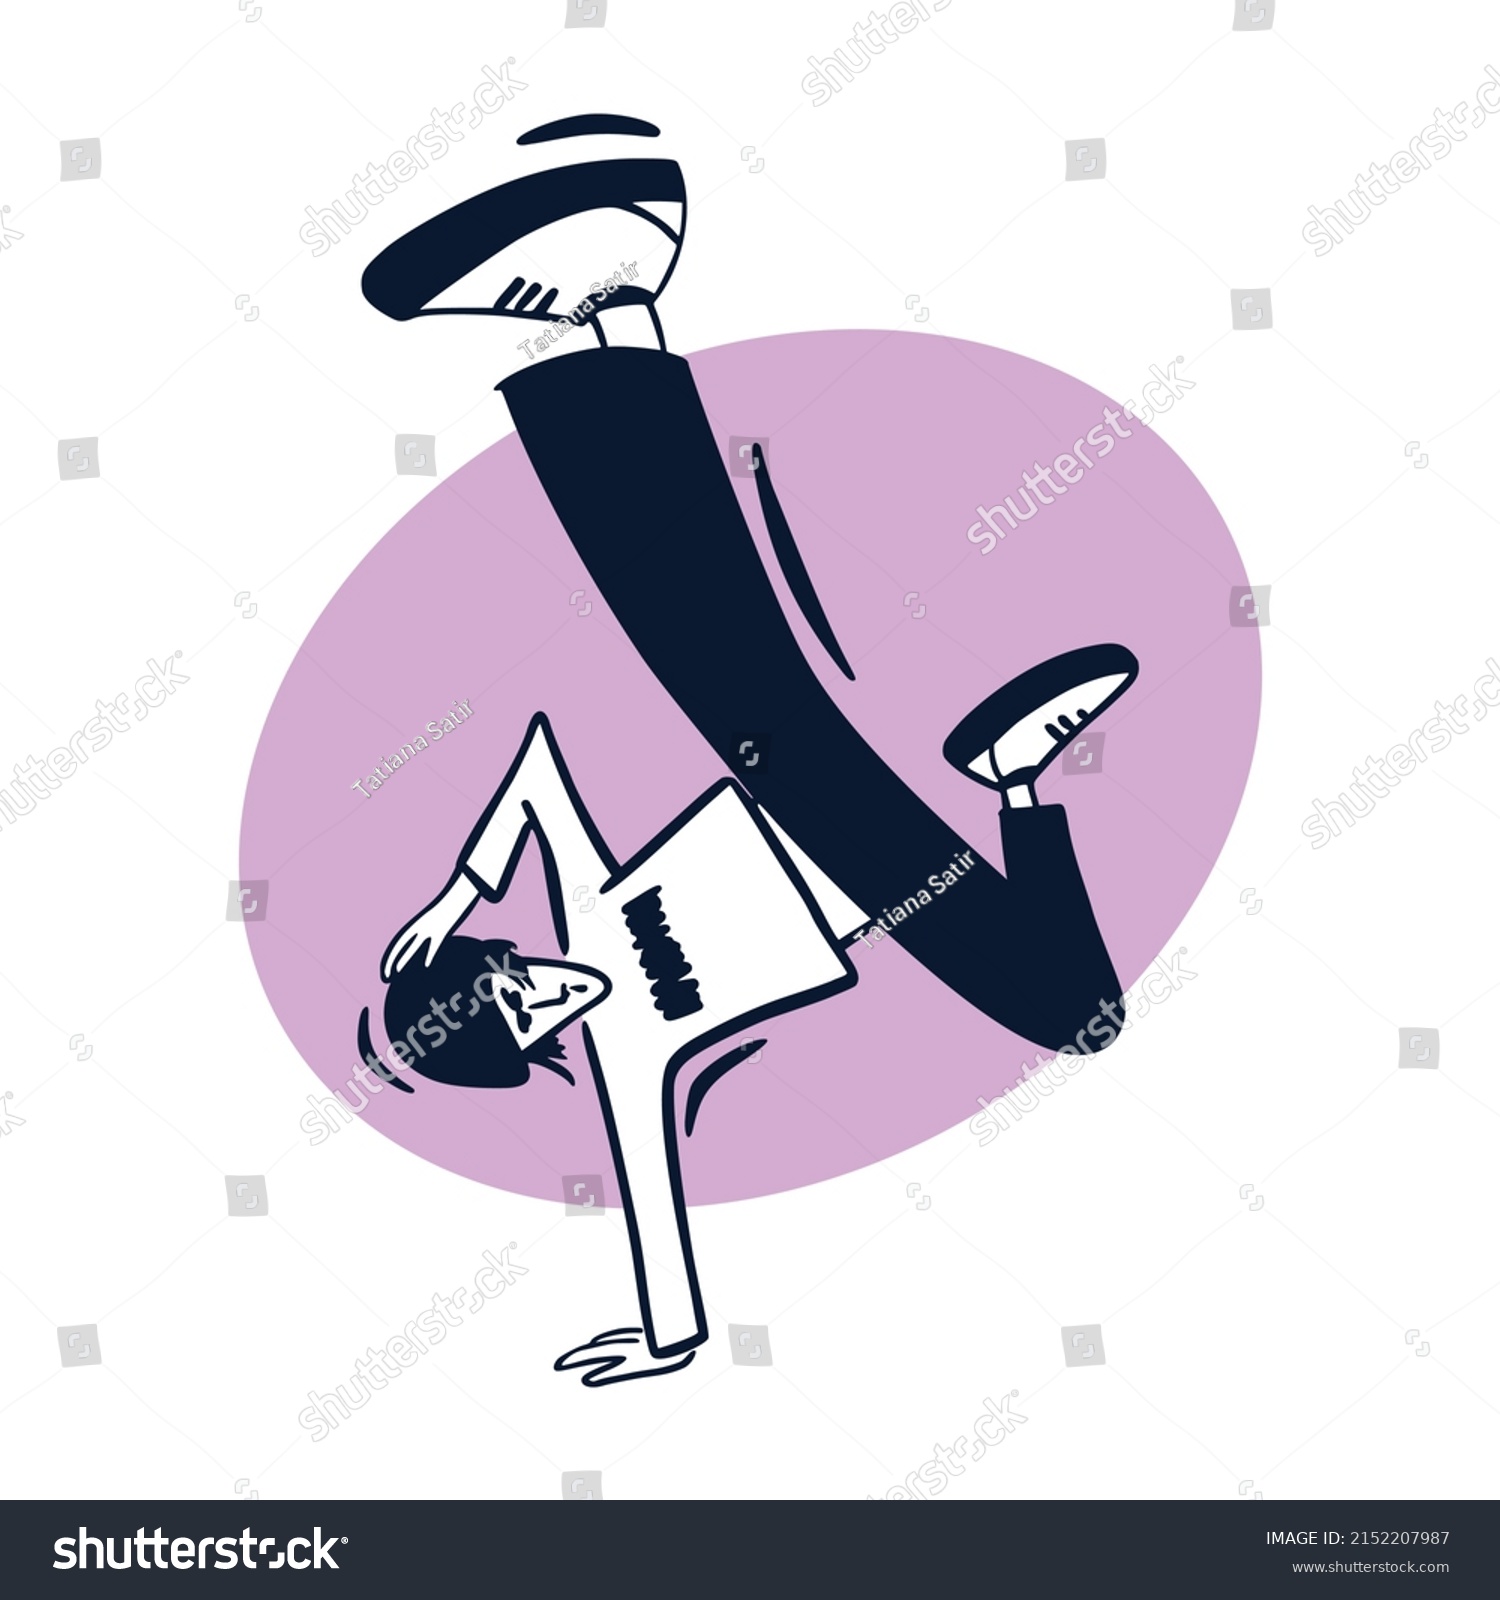 SVG of Break dancer performing stunts. B-boy jumping. Street dance handstand move. Black and white character on violet circle background. Sketch style vector design illustrations. svg